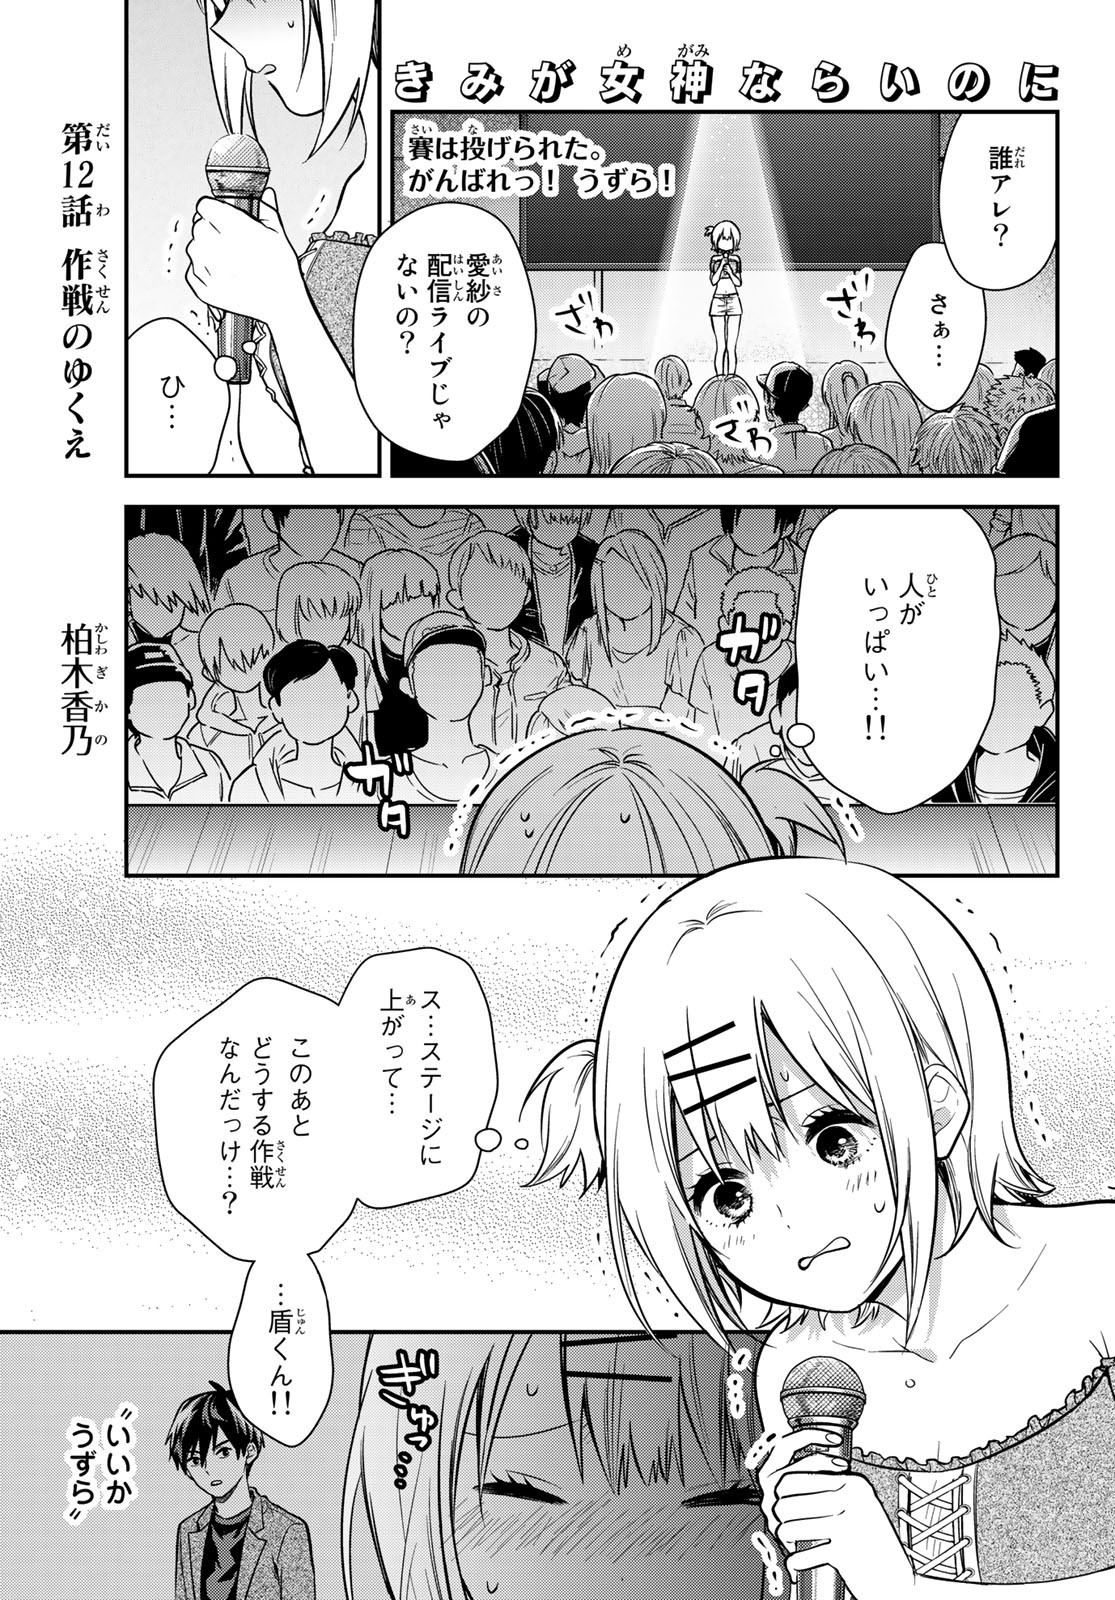 Kimi ga Megami Nara Ii no ni (I Wish You Were My Muse) - Chapter 012 - Page 1